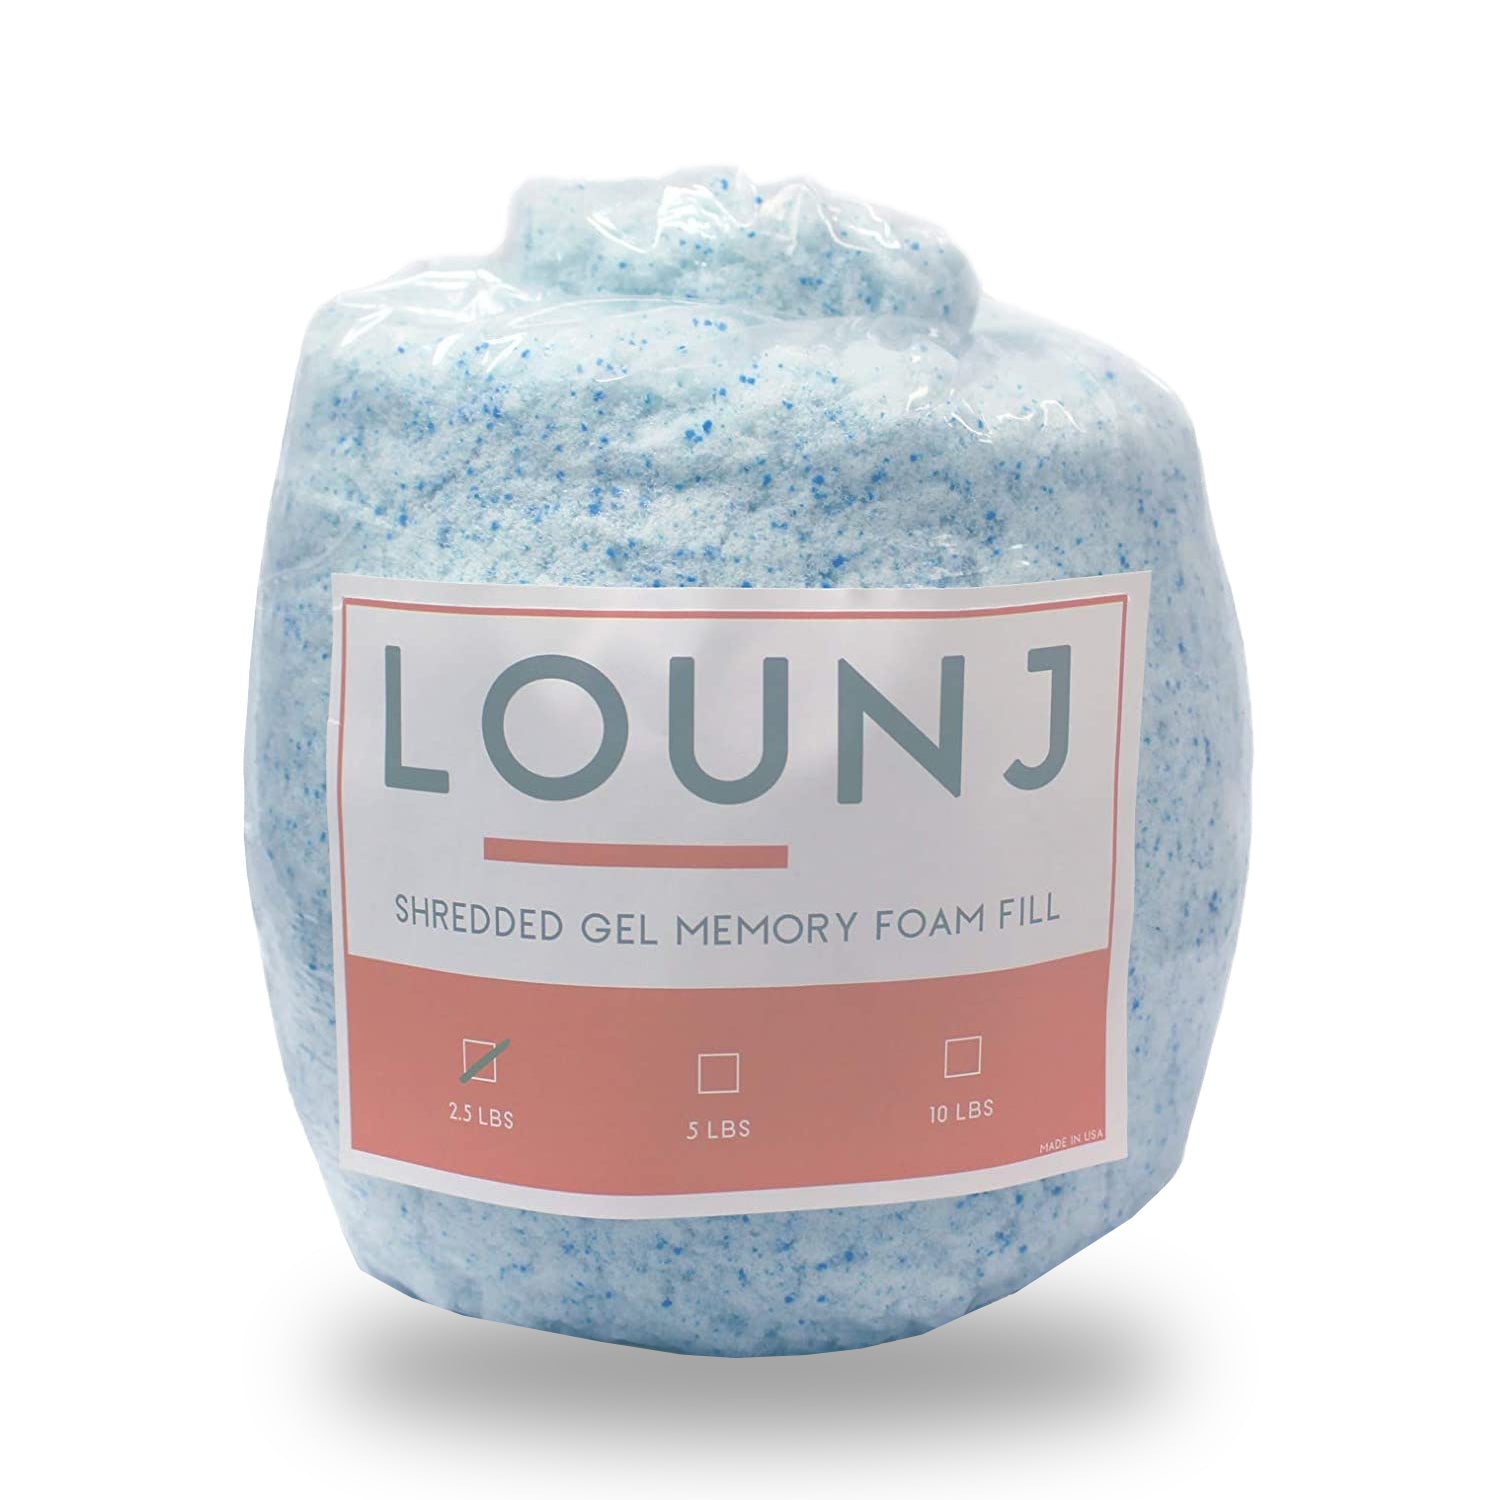 Lounj Shredded Memory Foam Fill for Cushions, Crafts, Bean Bags, Pillows, or Dog